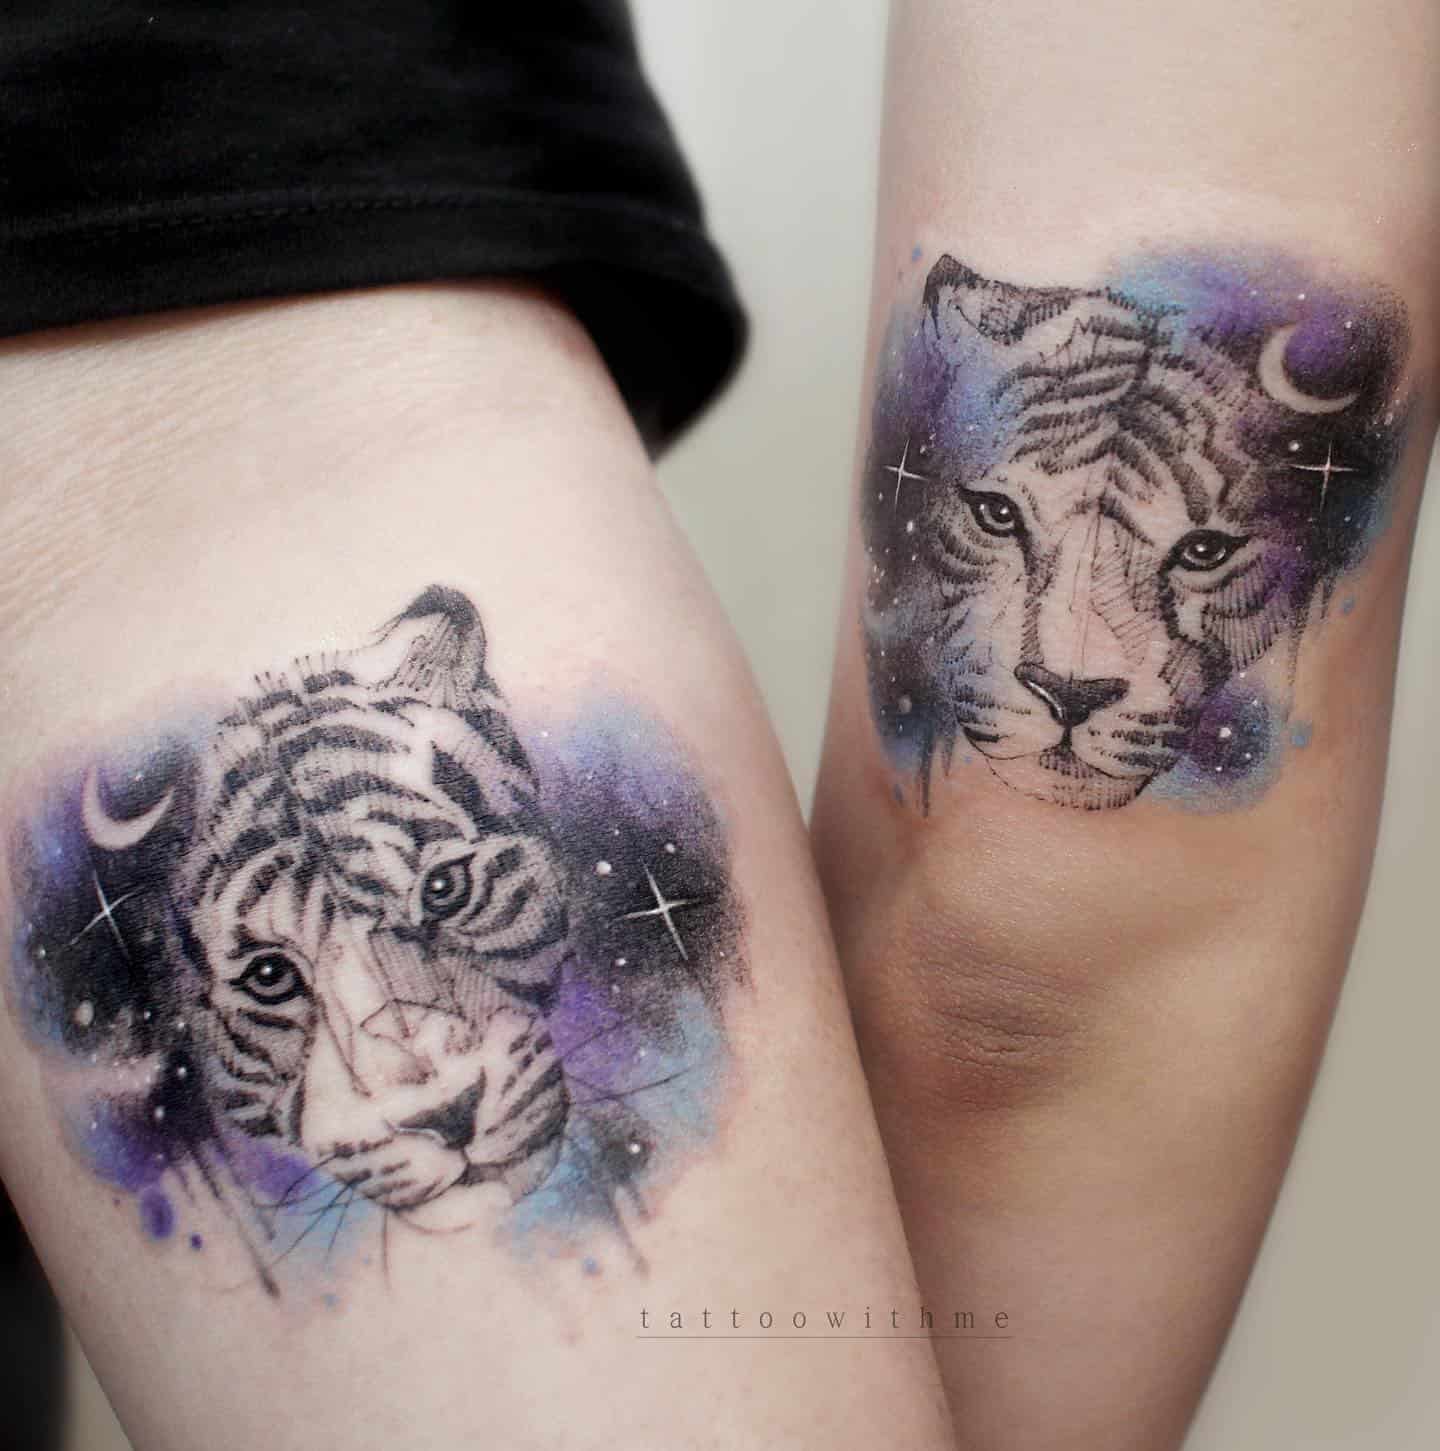 15 Realistic Tiger Tattoo Designs For Women  PetPress